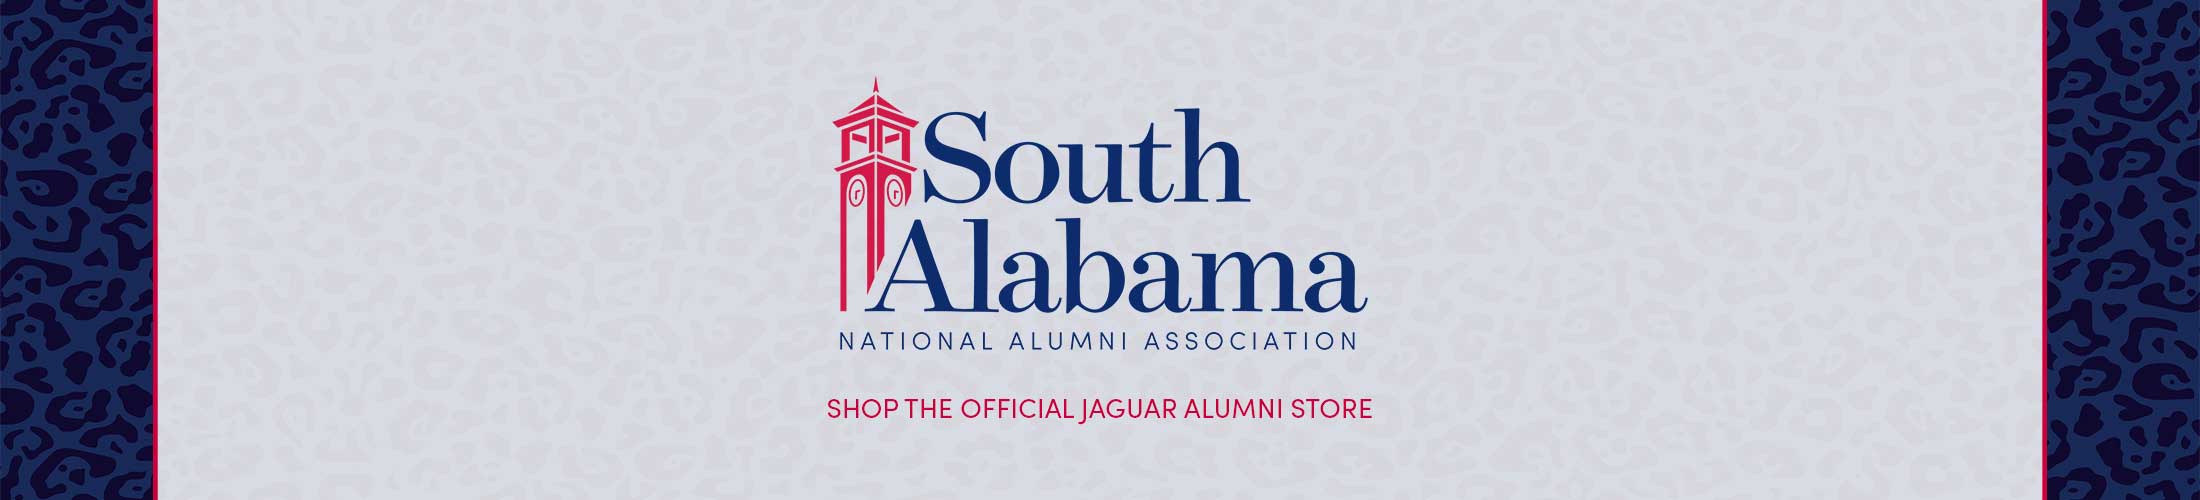 South Alabama Nationa Alumni Association Shop the official Jaguar Alumni Store